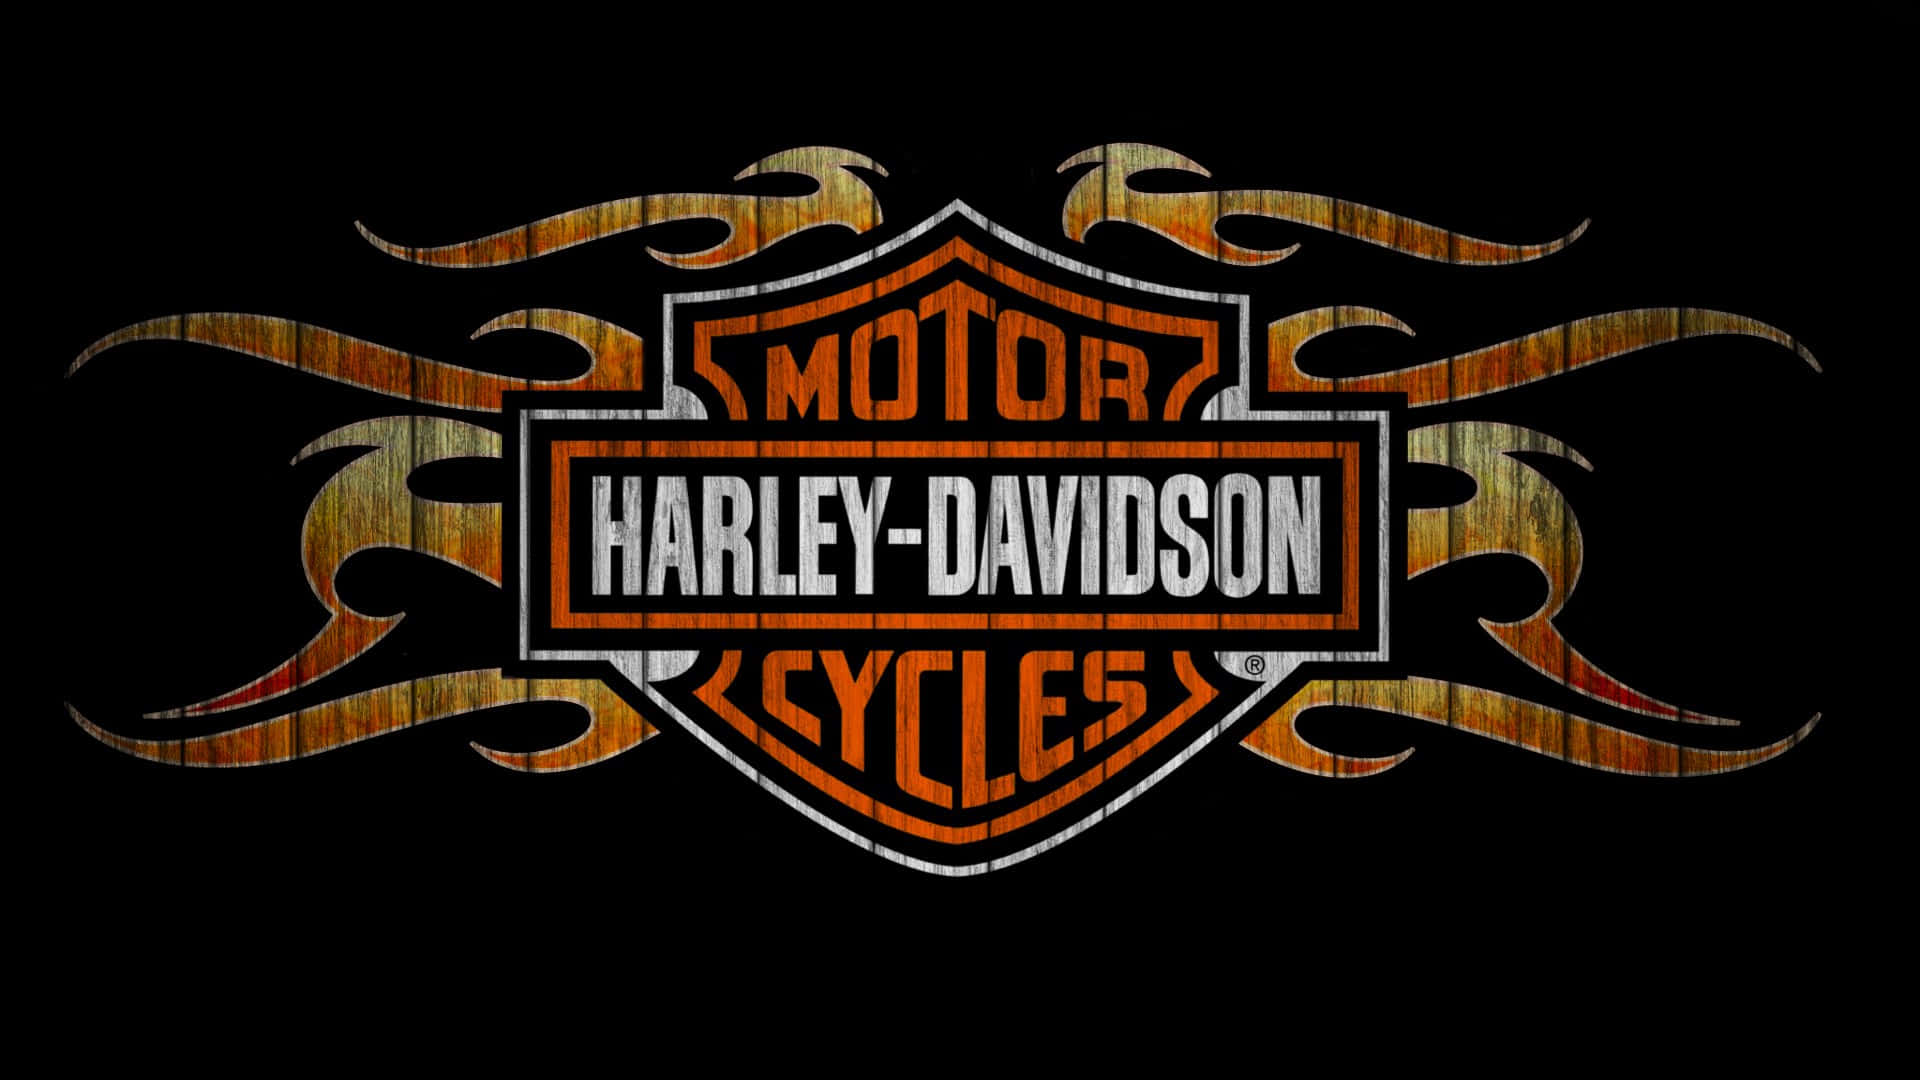 Motor Harley Davidson Cycles Logo Background